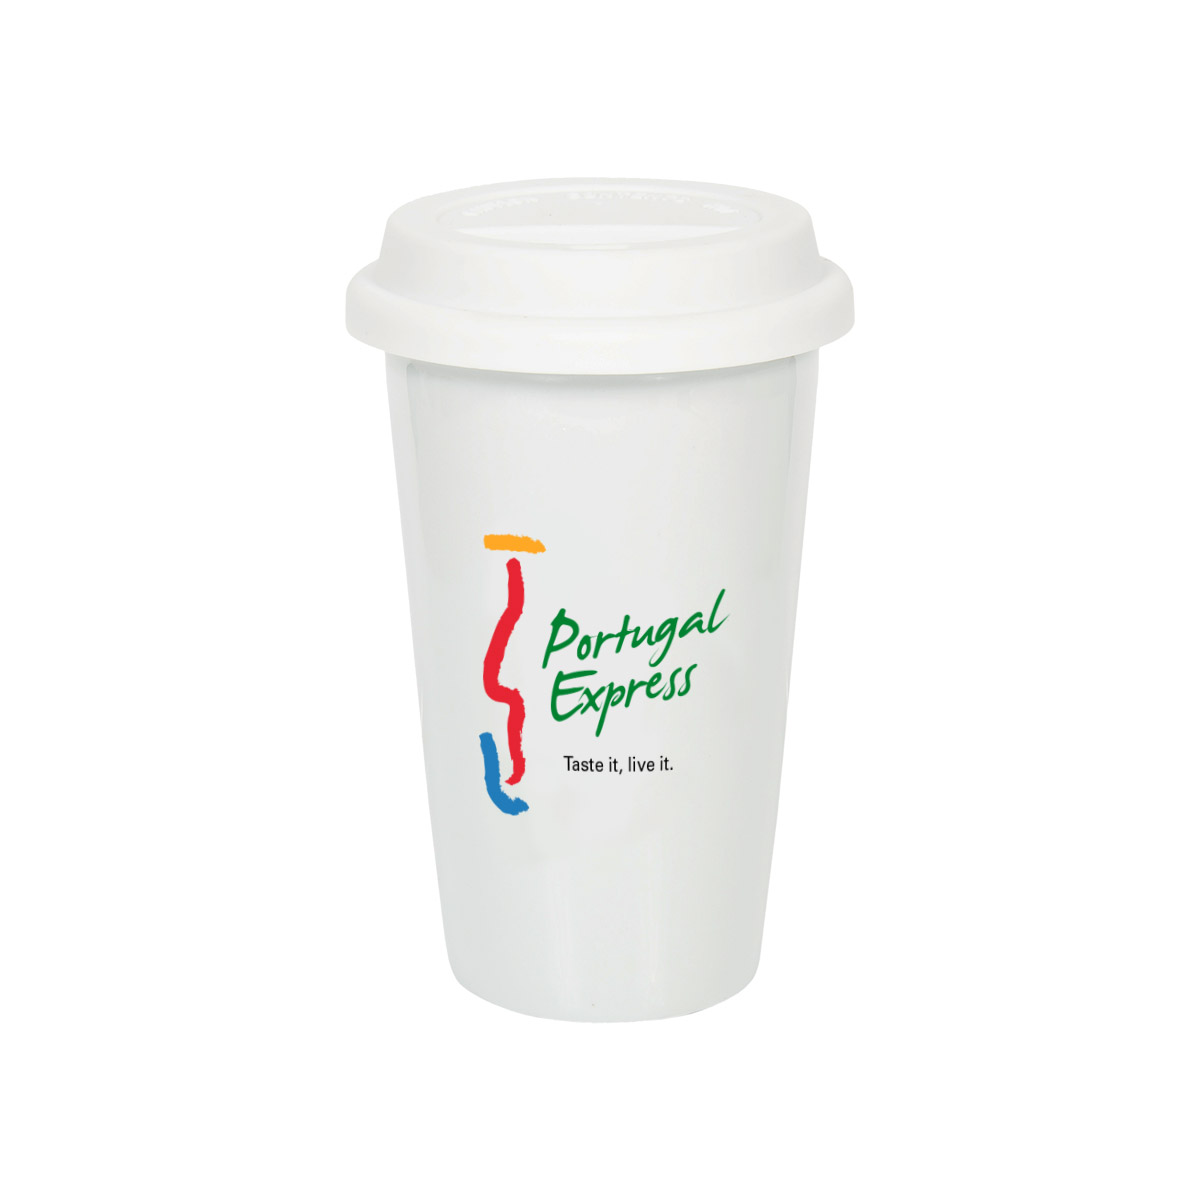 Portugal Express restaurant logo design cup branding